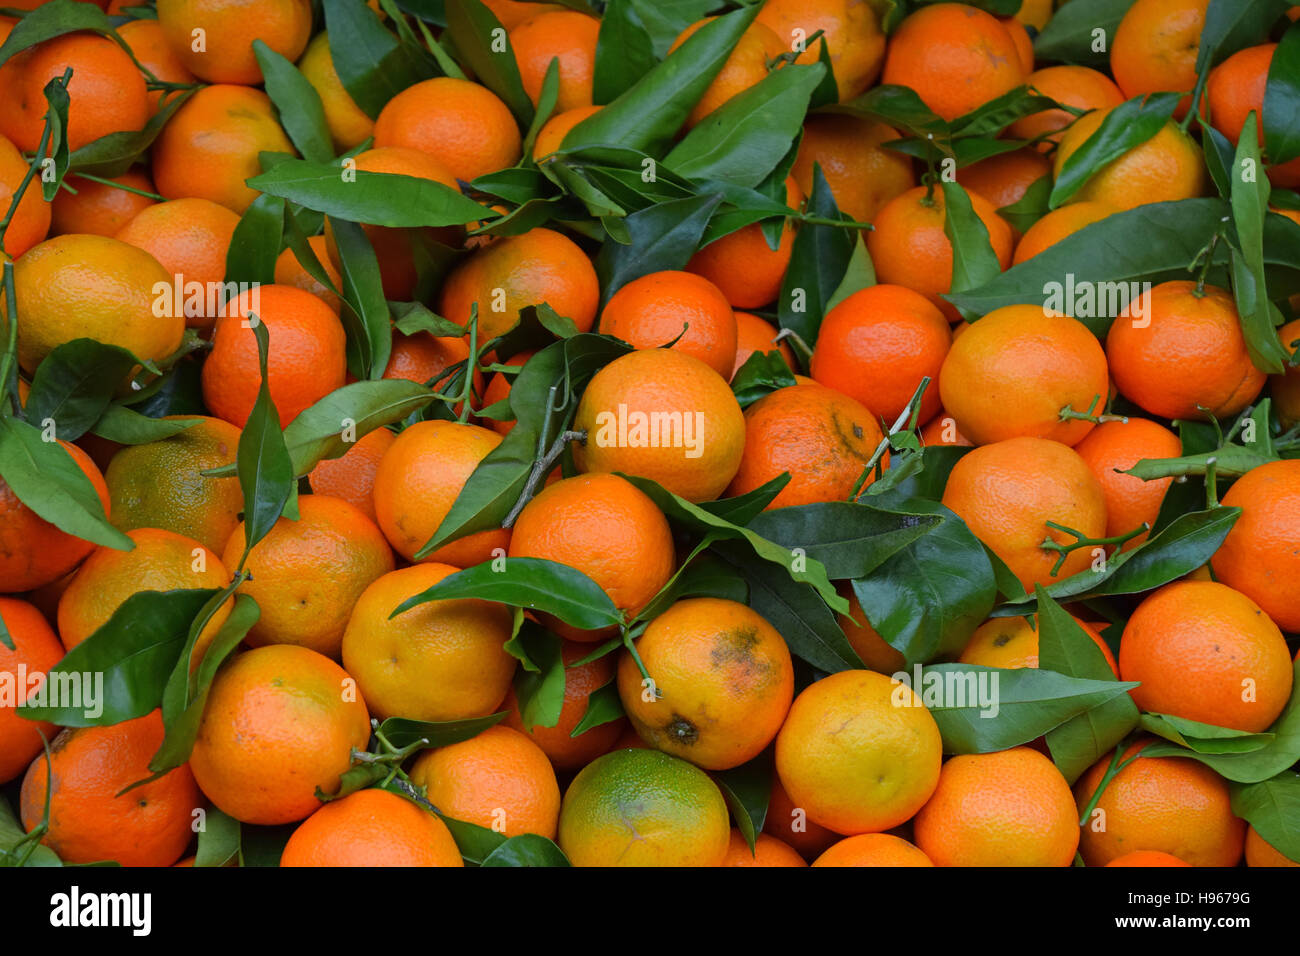 https://c8.alamy.com/comp/H9679G/fresh-ripe-mandarin-oranges-clementine-tangerine-with-green-leaves-H9679G.jpg